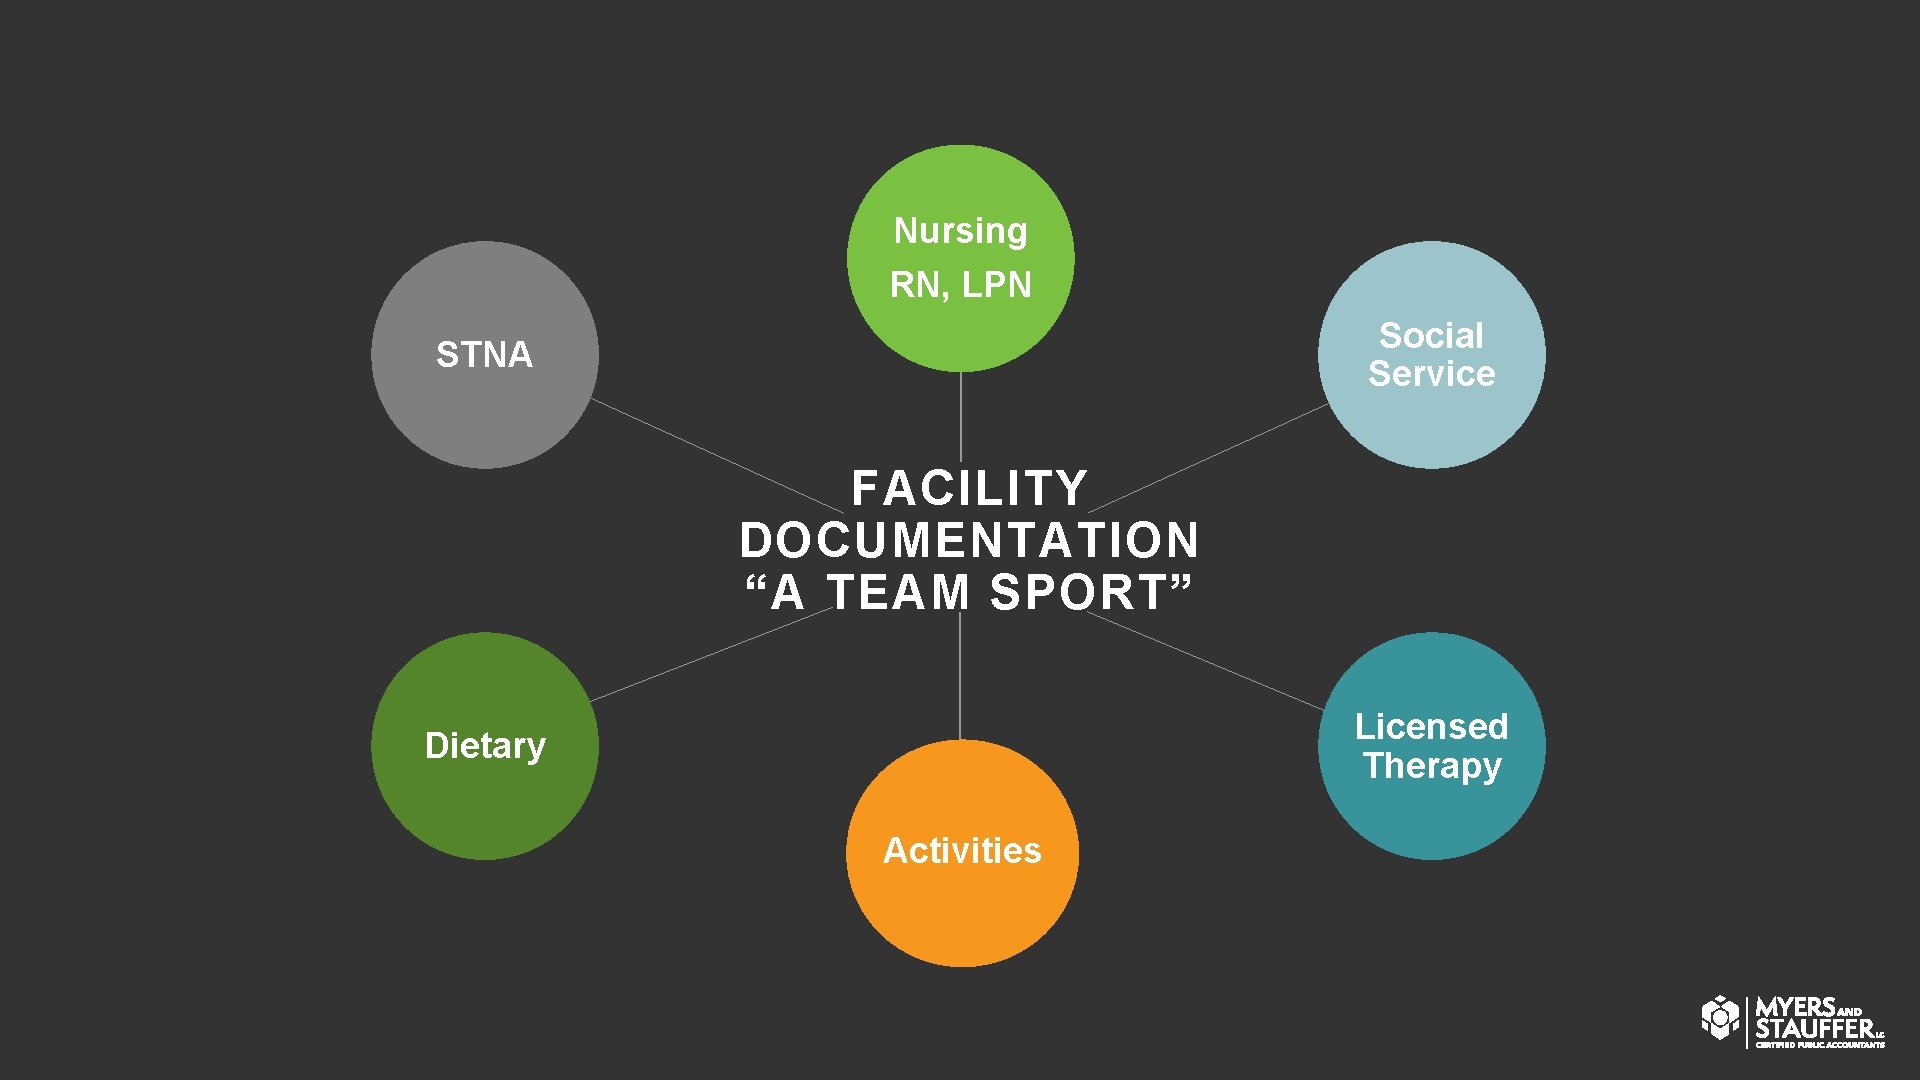 Nursing RN, LPN Social Service STNA FACILITY DOCUMENTATION “A TEAM SPORT” Licensed Therapy Dietary